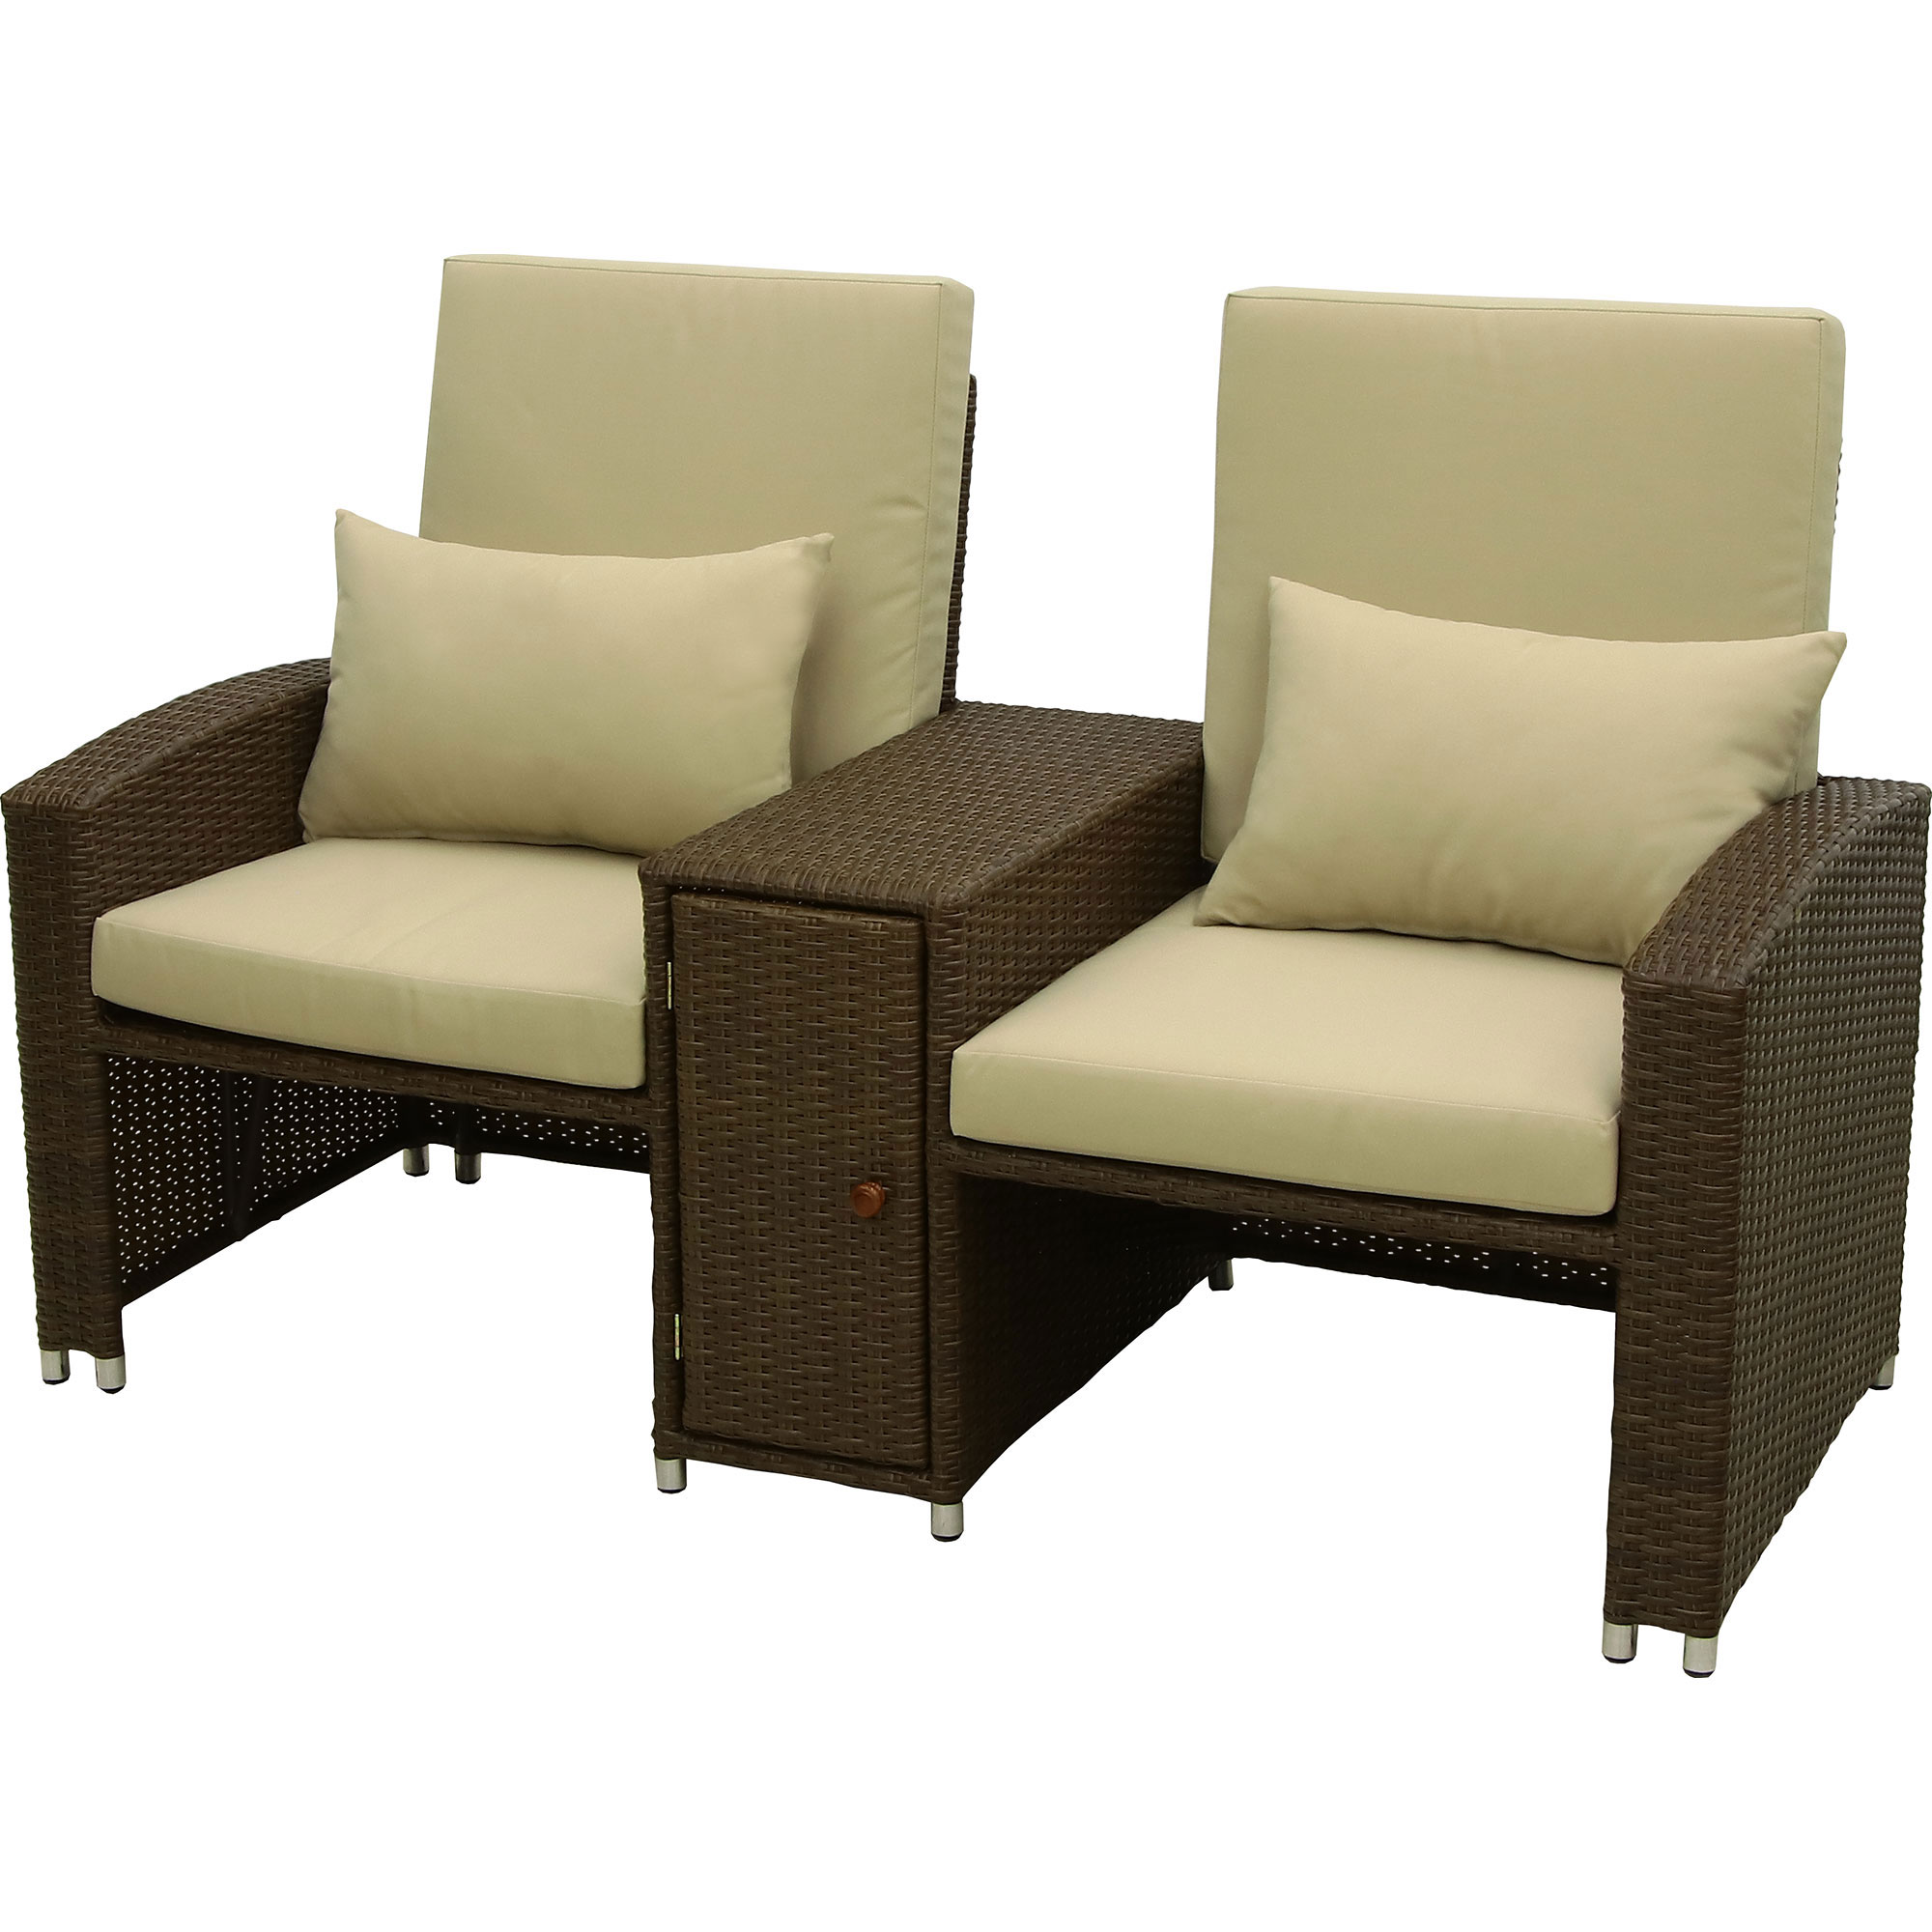 Комплект мебели Ronica Deli коричневый 4 предмета, цвет светло-коричневый, размер 74х164х100 - фото 5